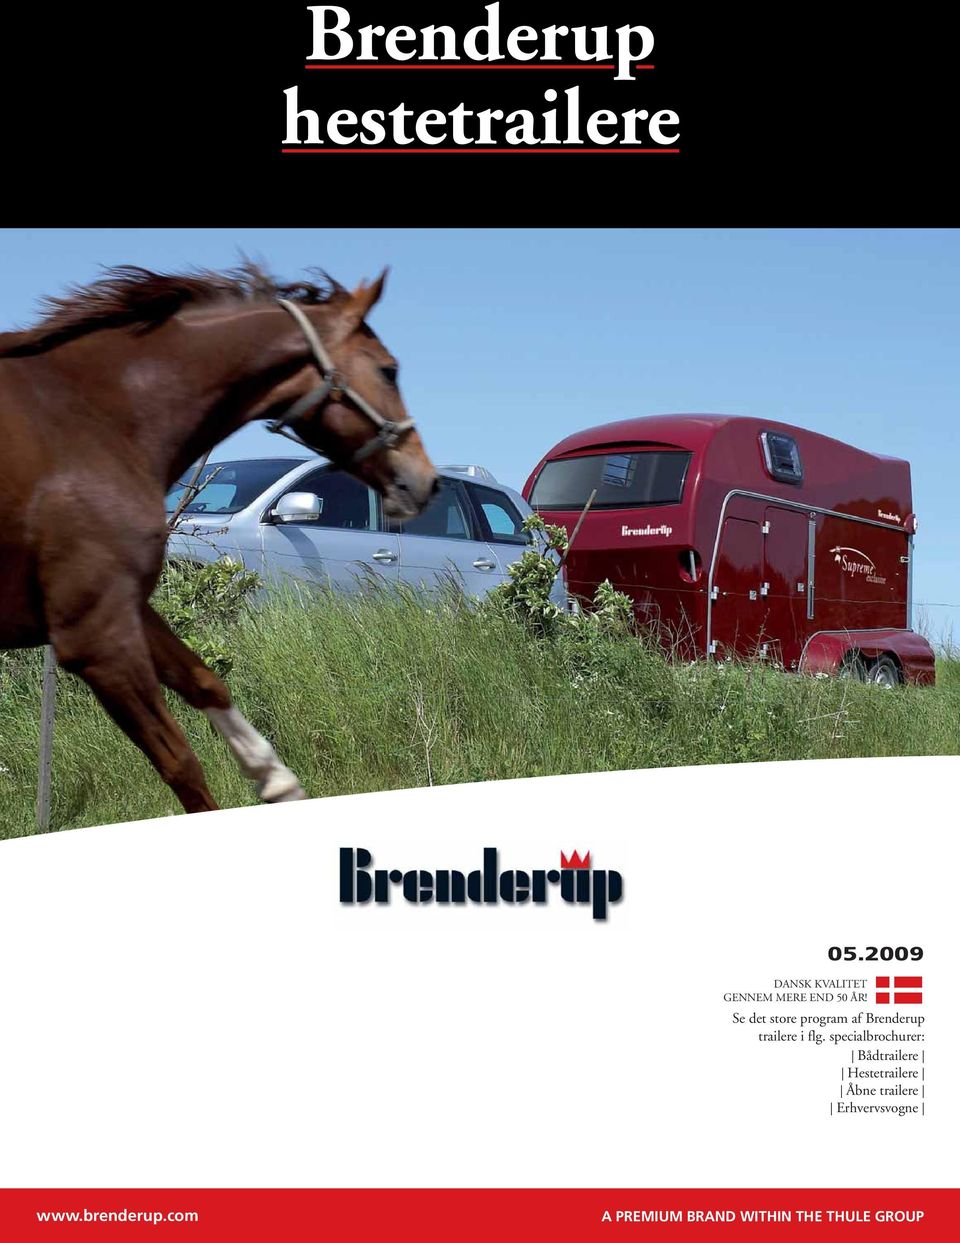 specialbrochurer: Bådtrailere Hestetrailere Åbne trailere